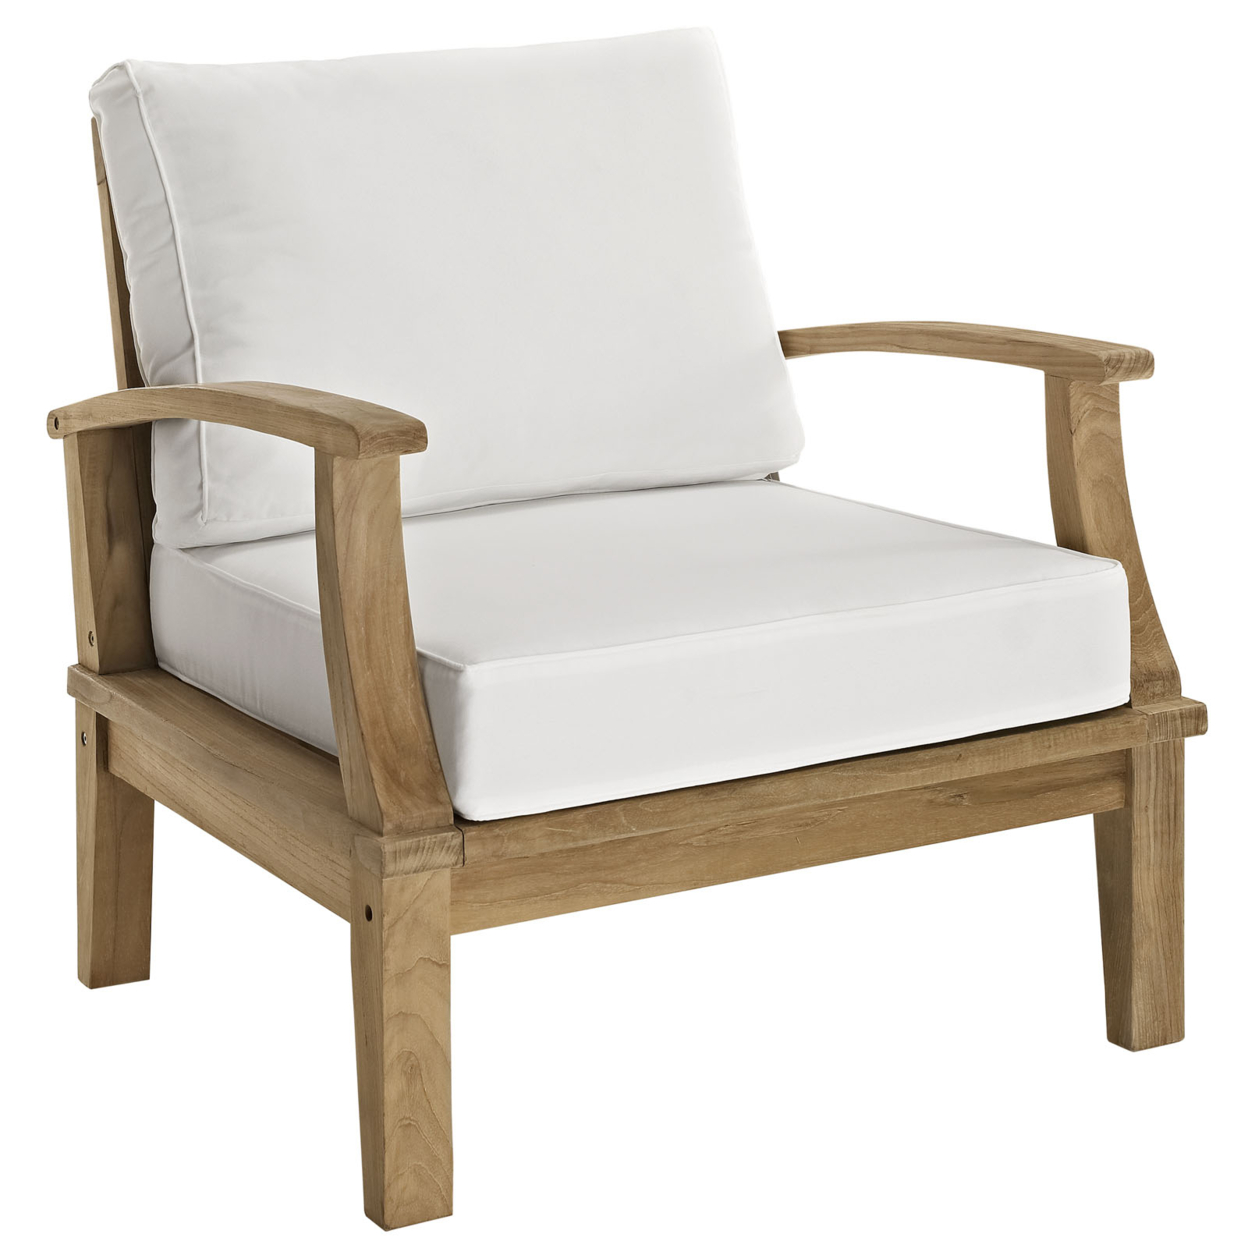 Marina 2 Piece Outdoor Patio Teak Sofa Set, Natural White Size : 32.5Lx45Wx31.5H